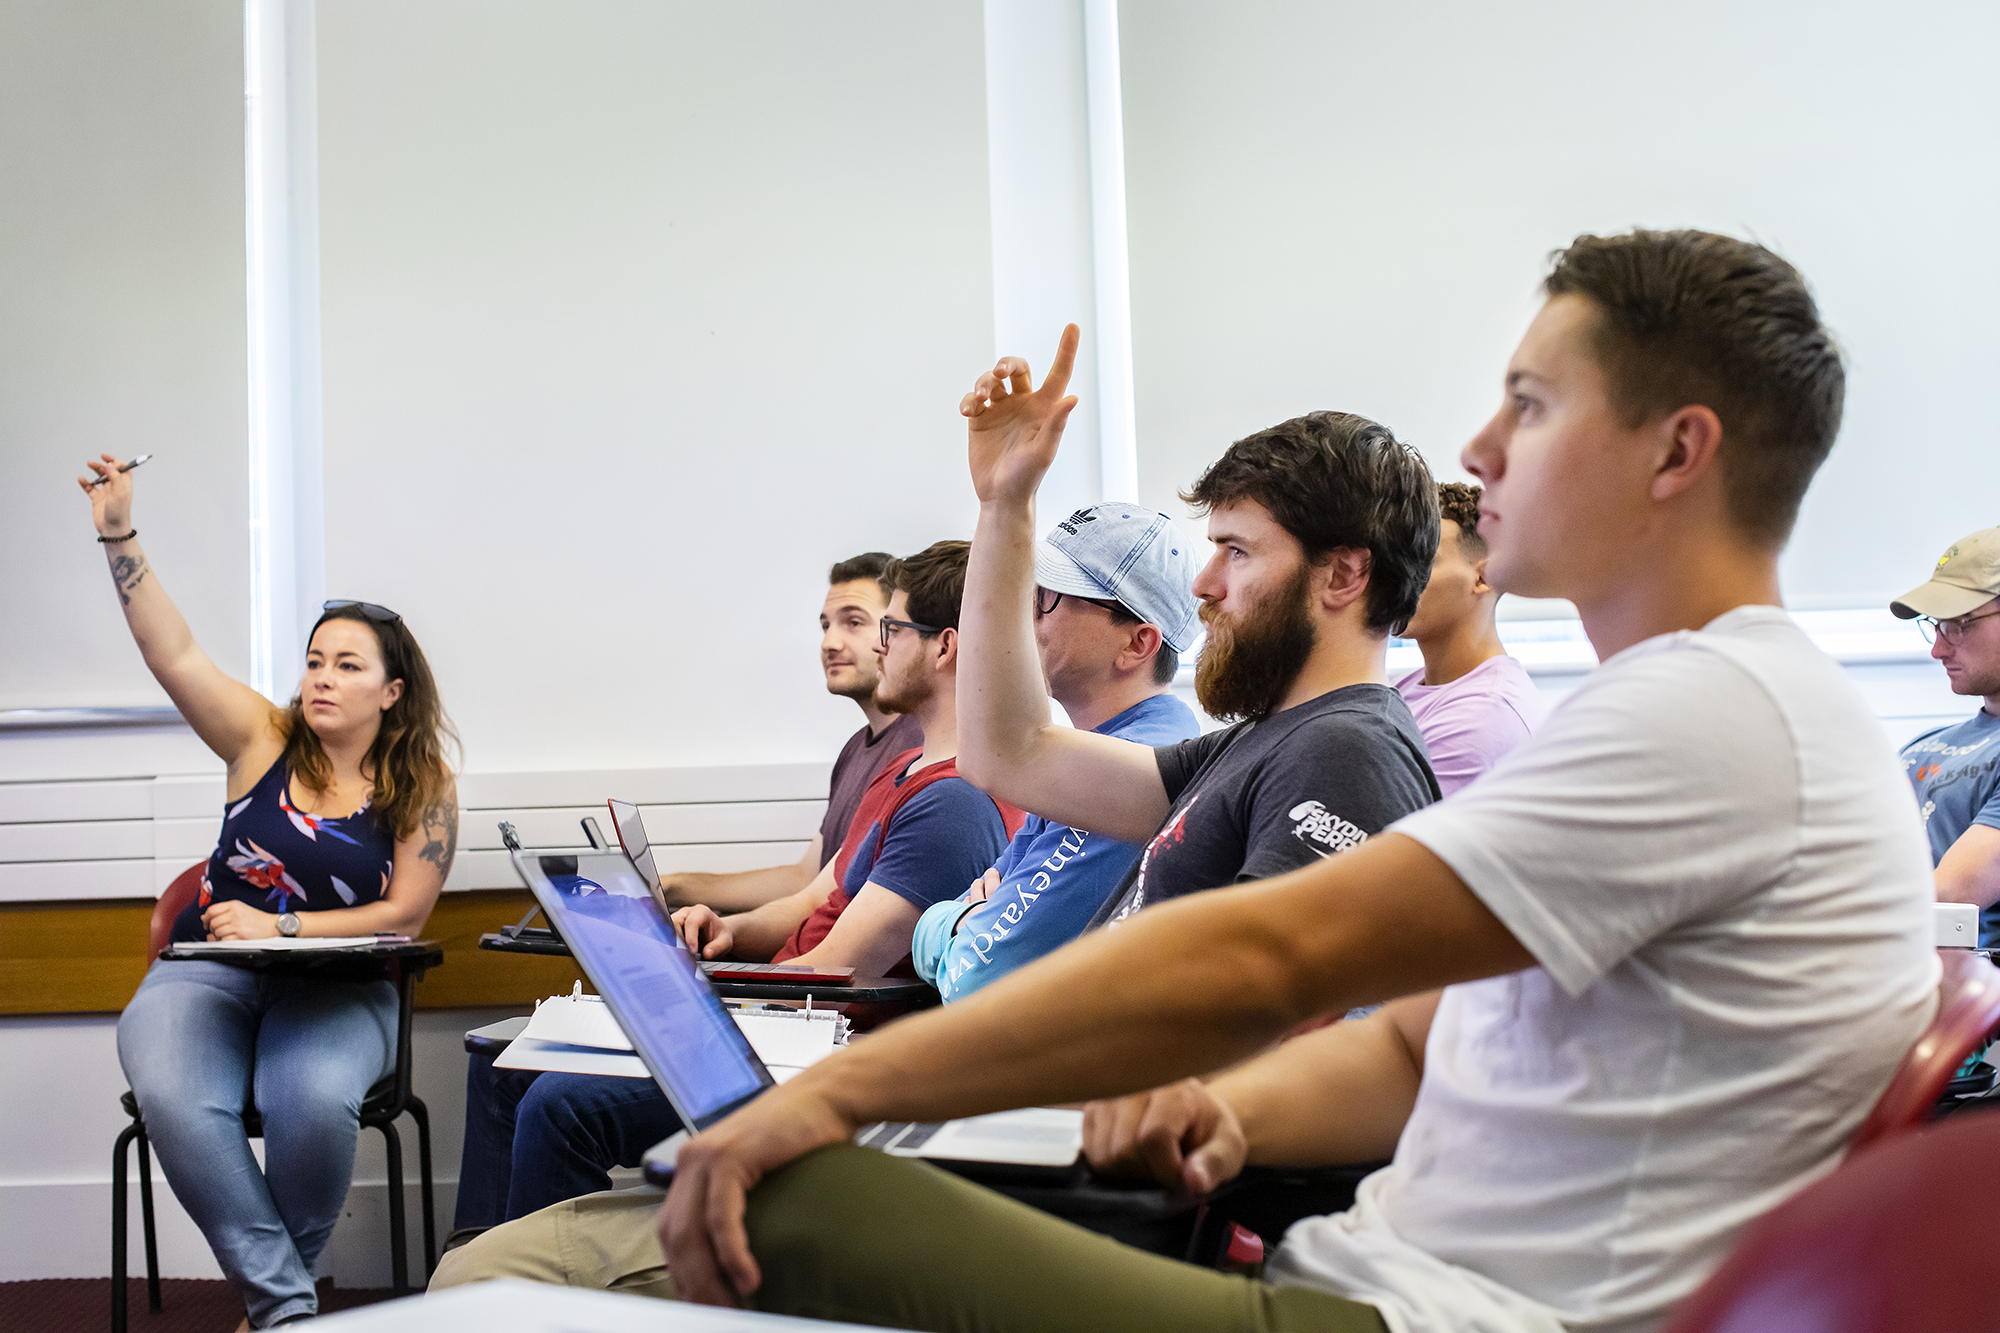 Students face forward in a classroom, a few raising hands